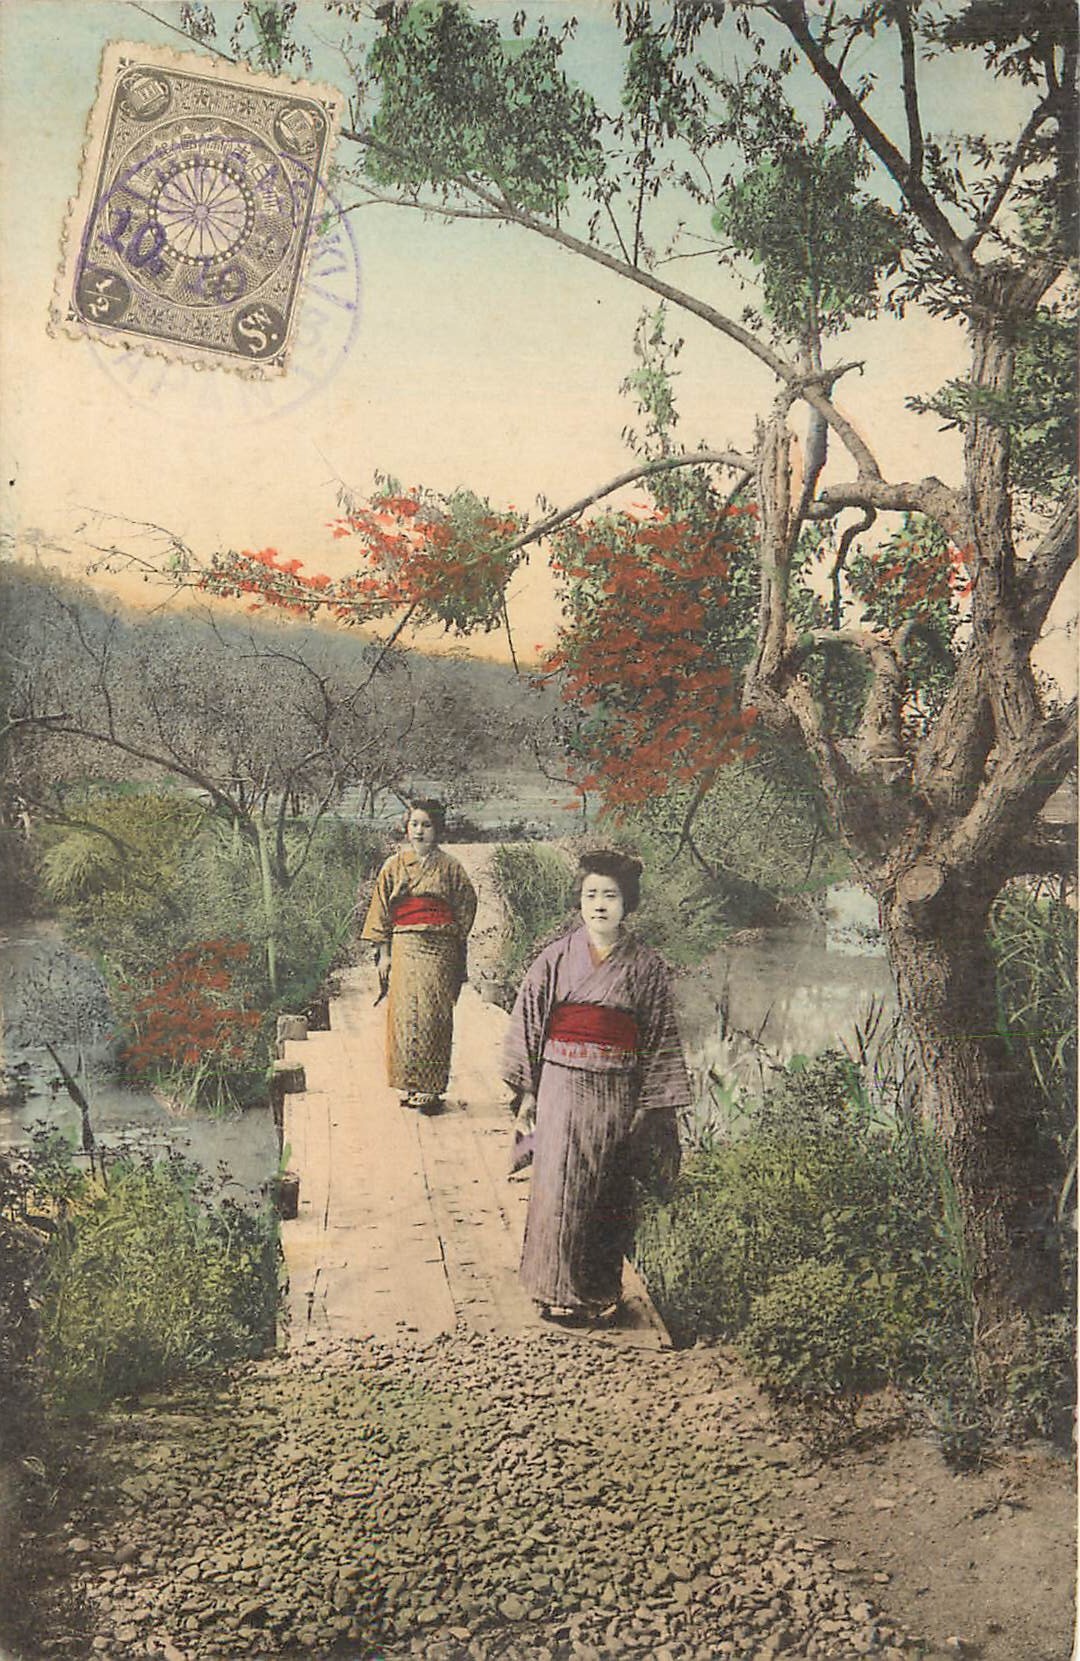 Japon Japan NAGASAKI Geïshas en kimono sur pont de bois 1914